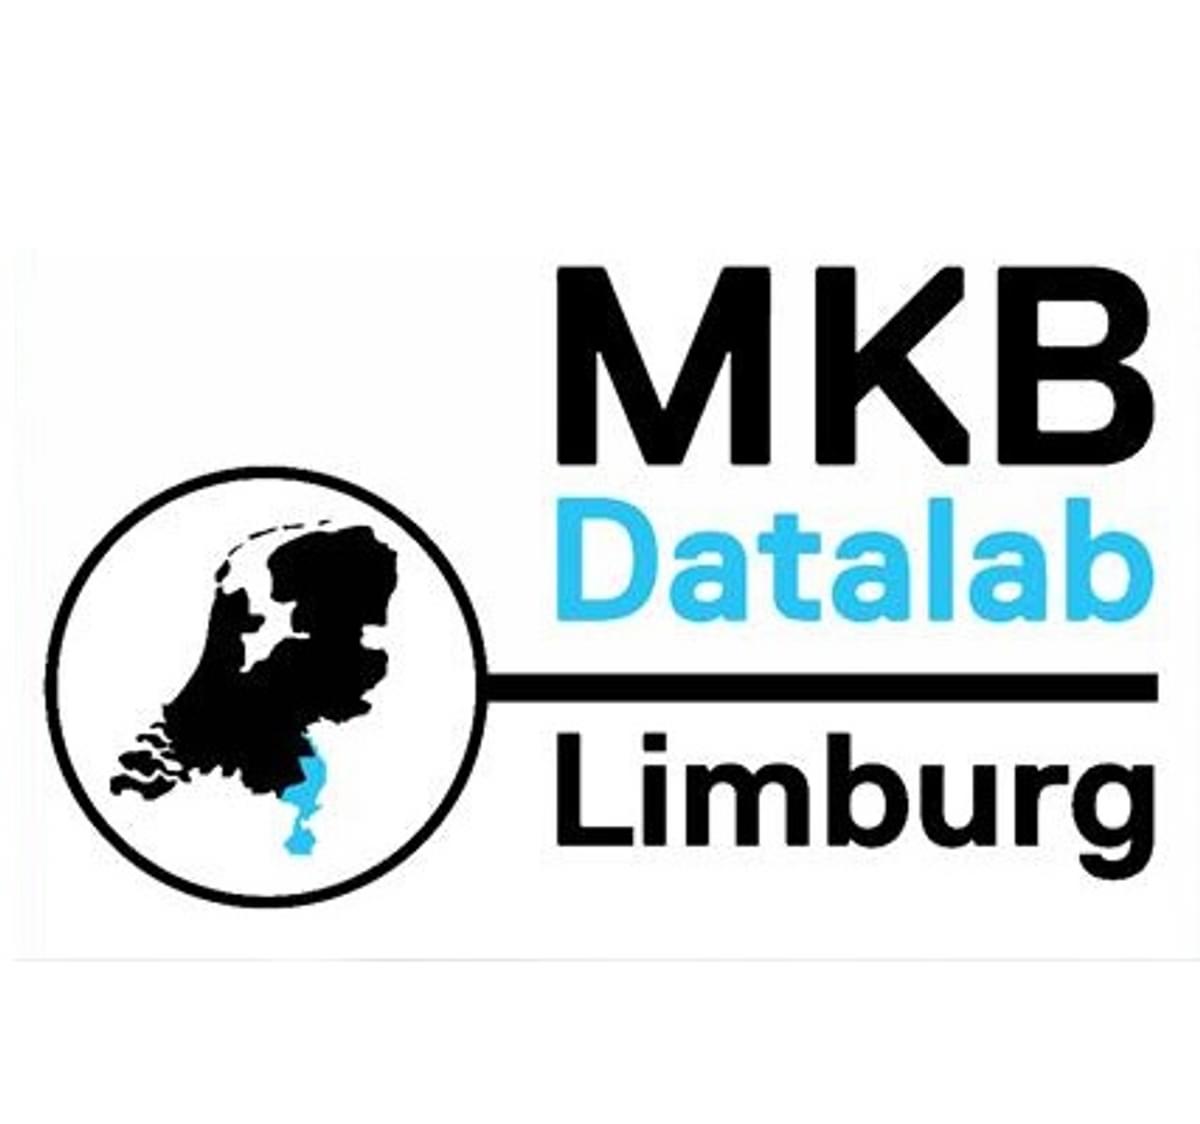 MKB Datalab Limburg biedt digitale hulp voor kleine ondernemingen image